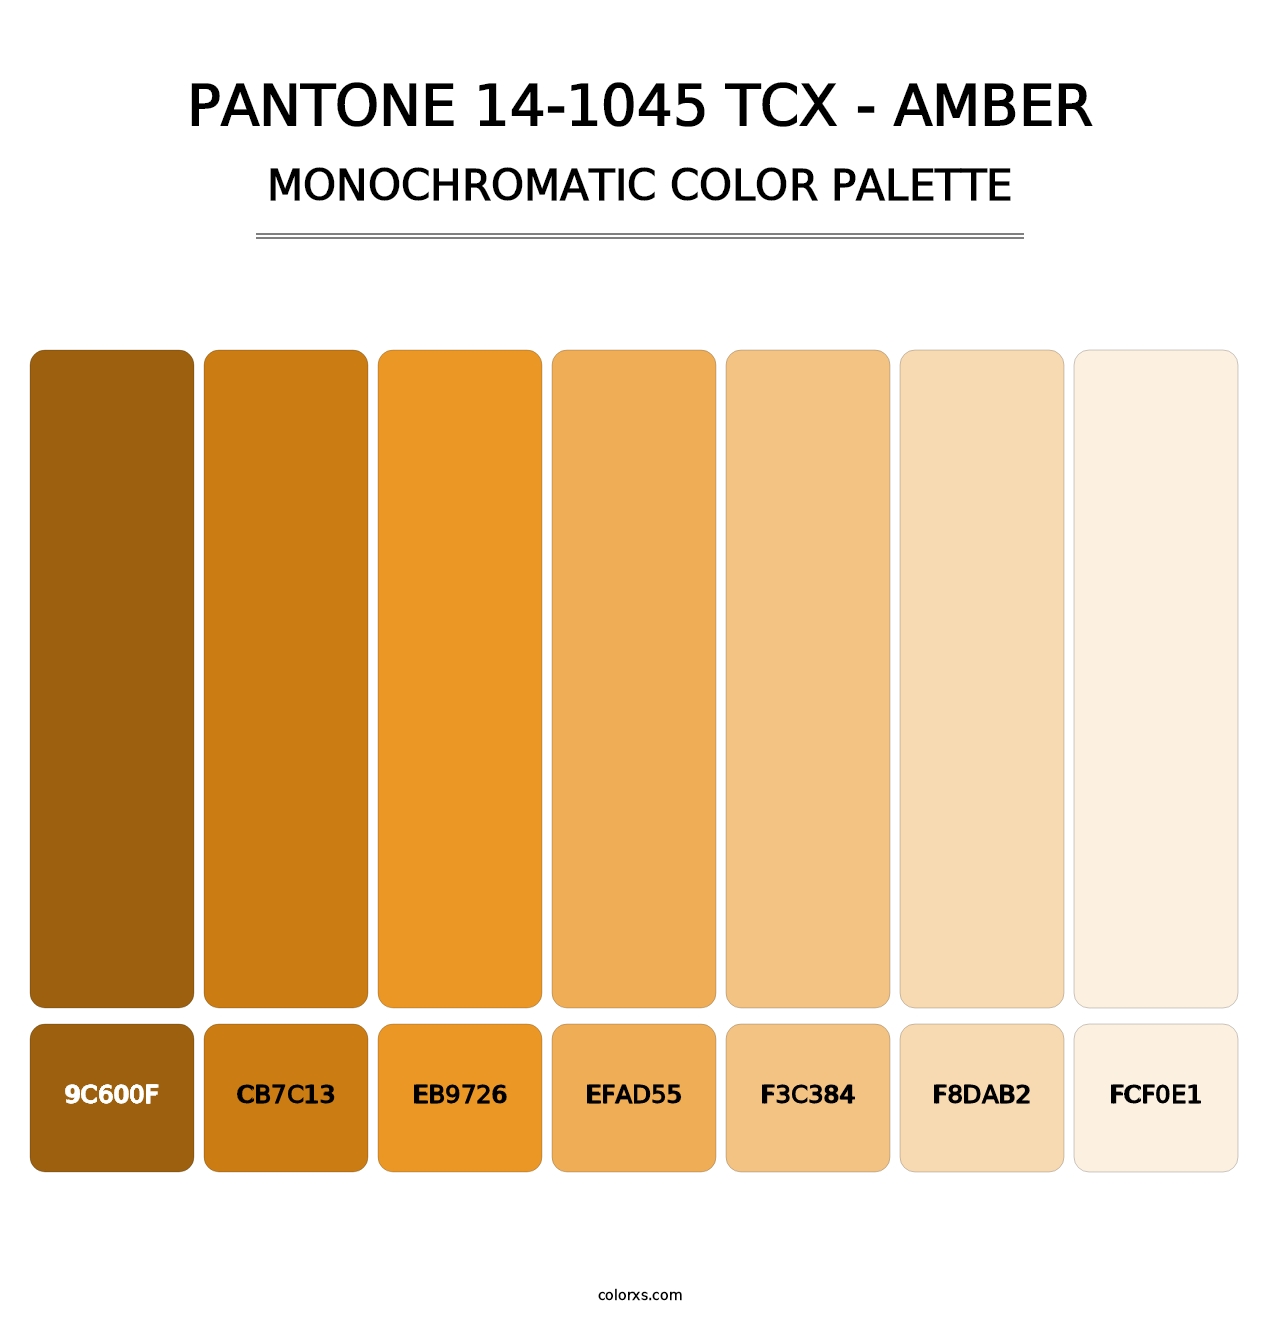 PANTONE 14-1045 TCX - Amber - Monochromatic Color Palette